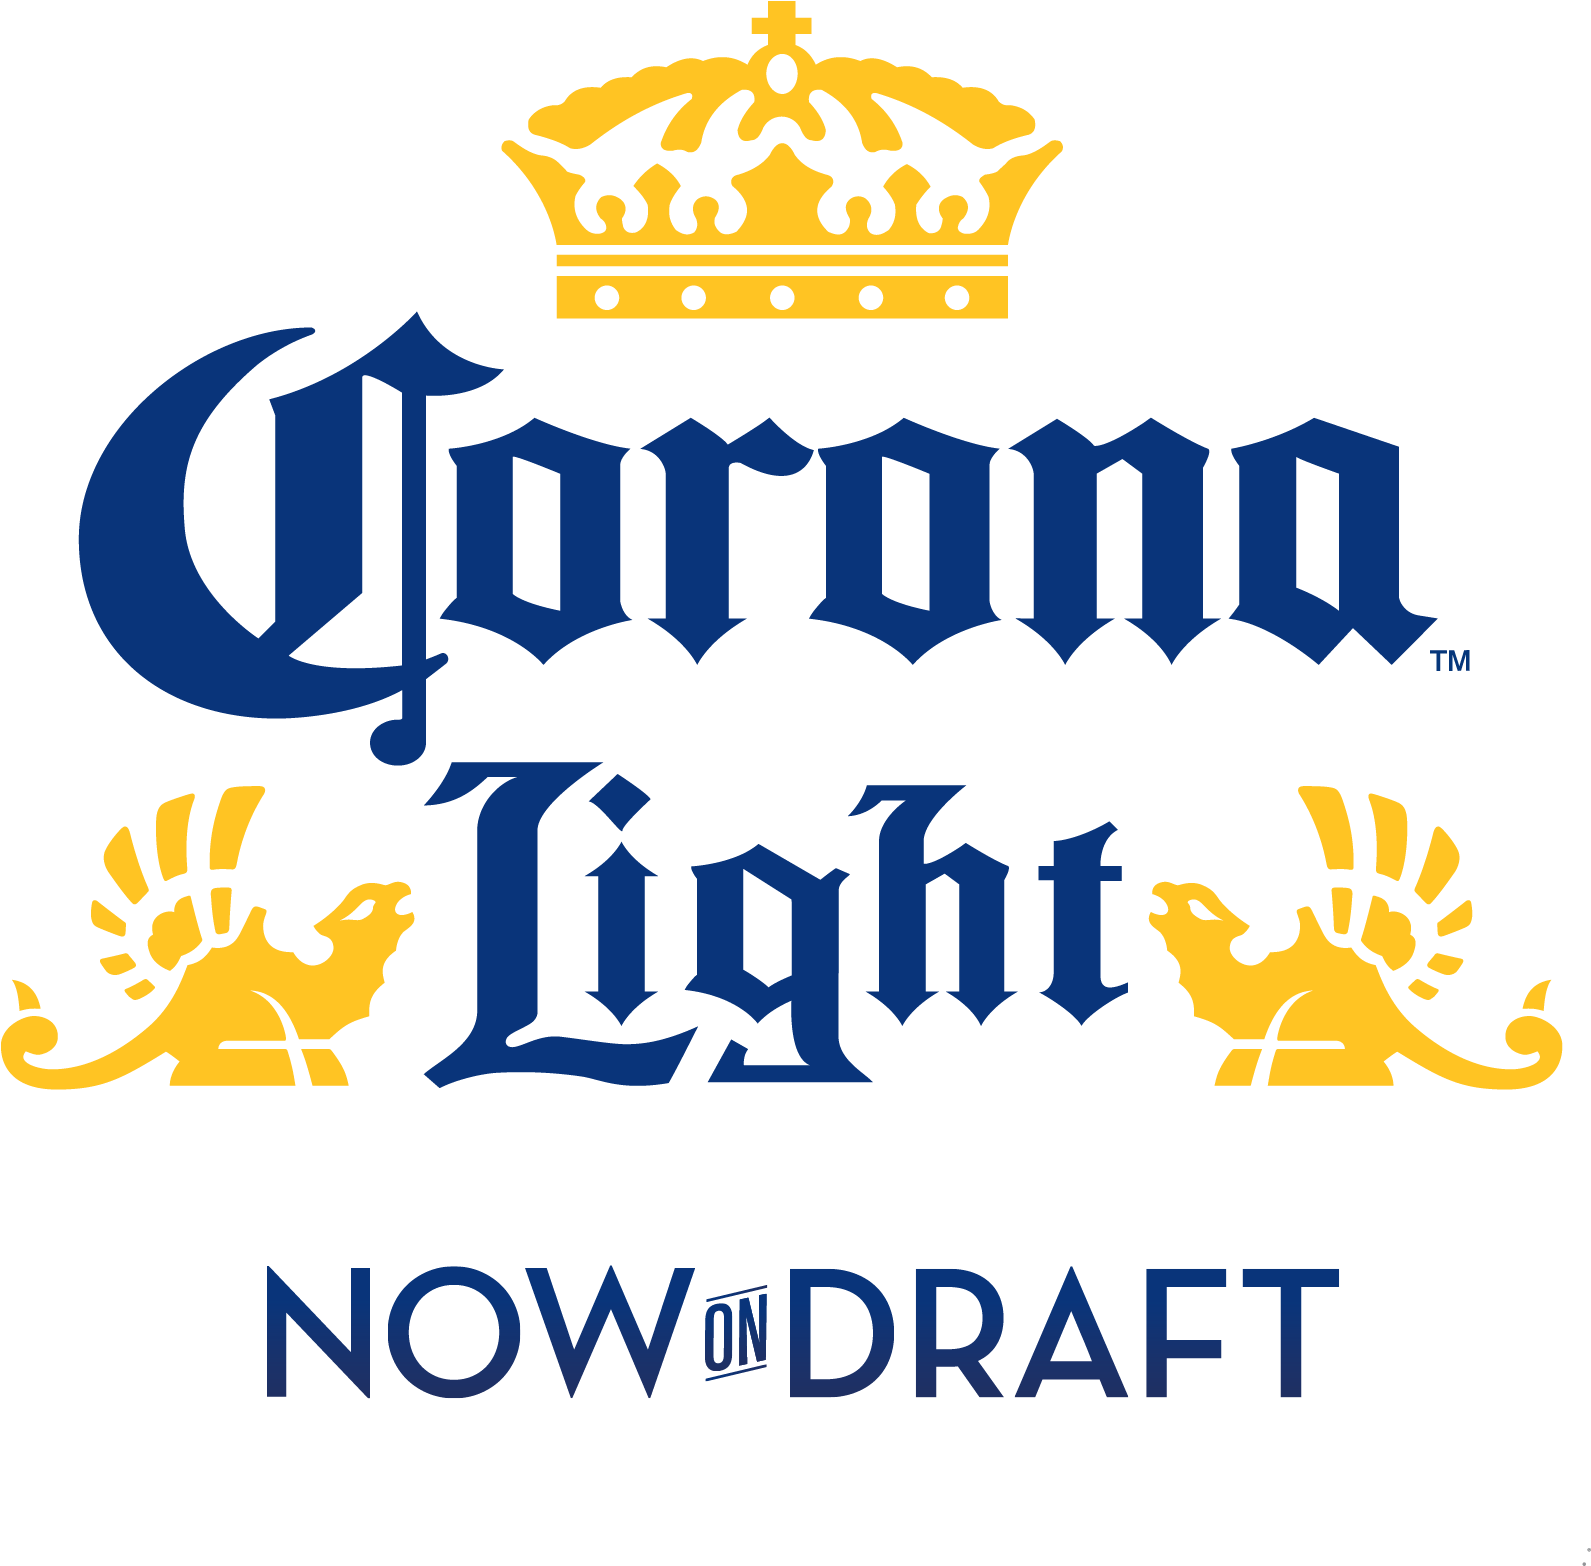 Corona Light On Draft Blue - Corona Extra (1591x1573), Png Download